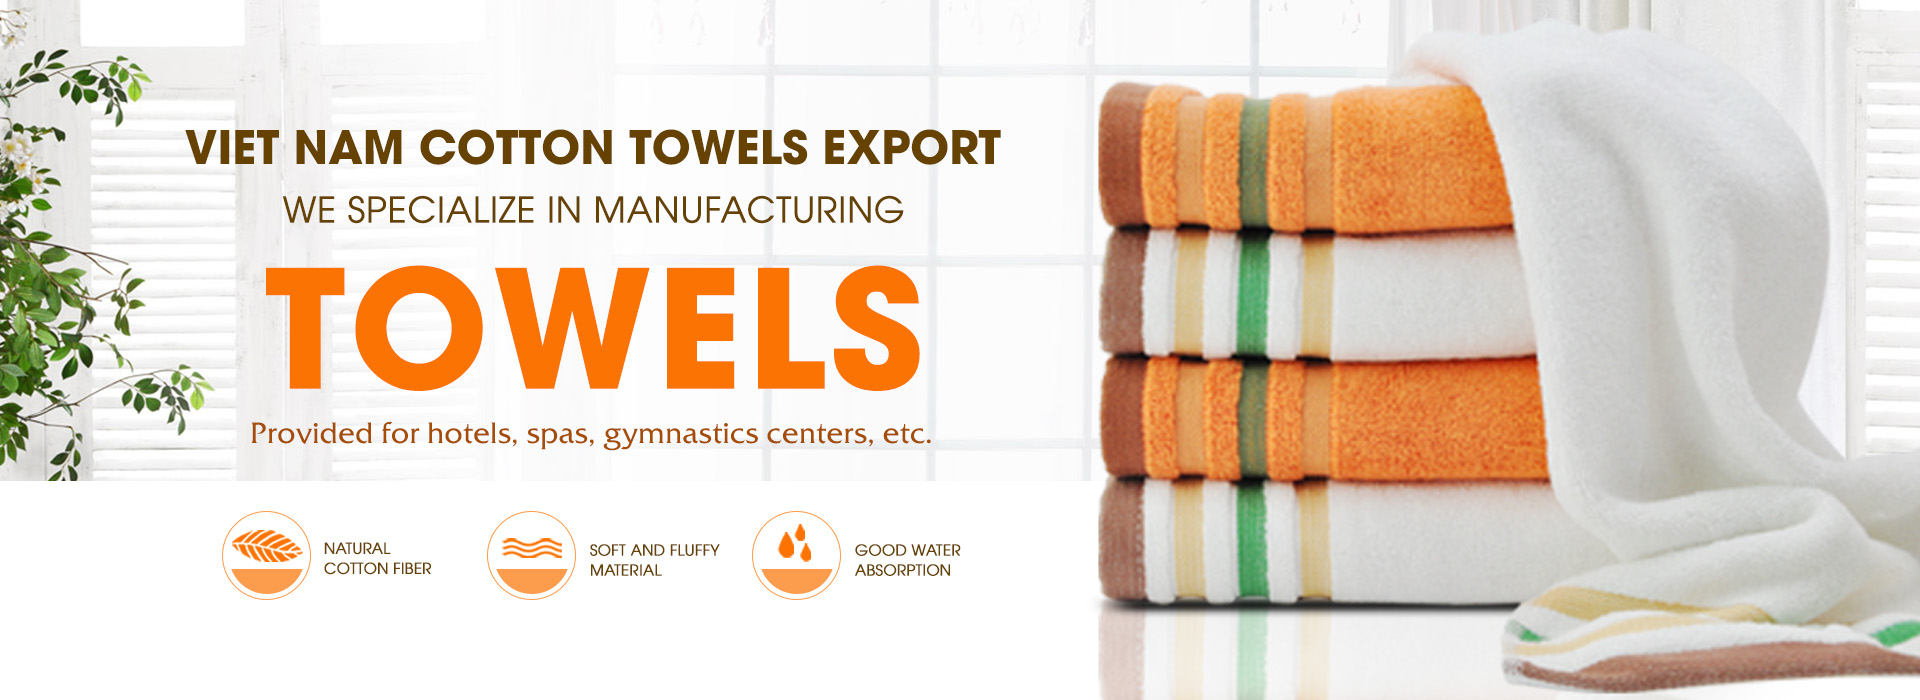 Viet Nam Cotton Towels Export Company Limited